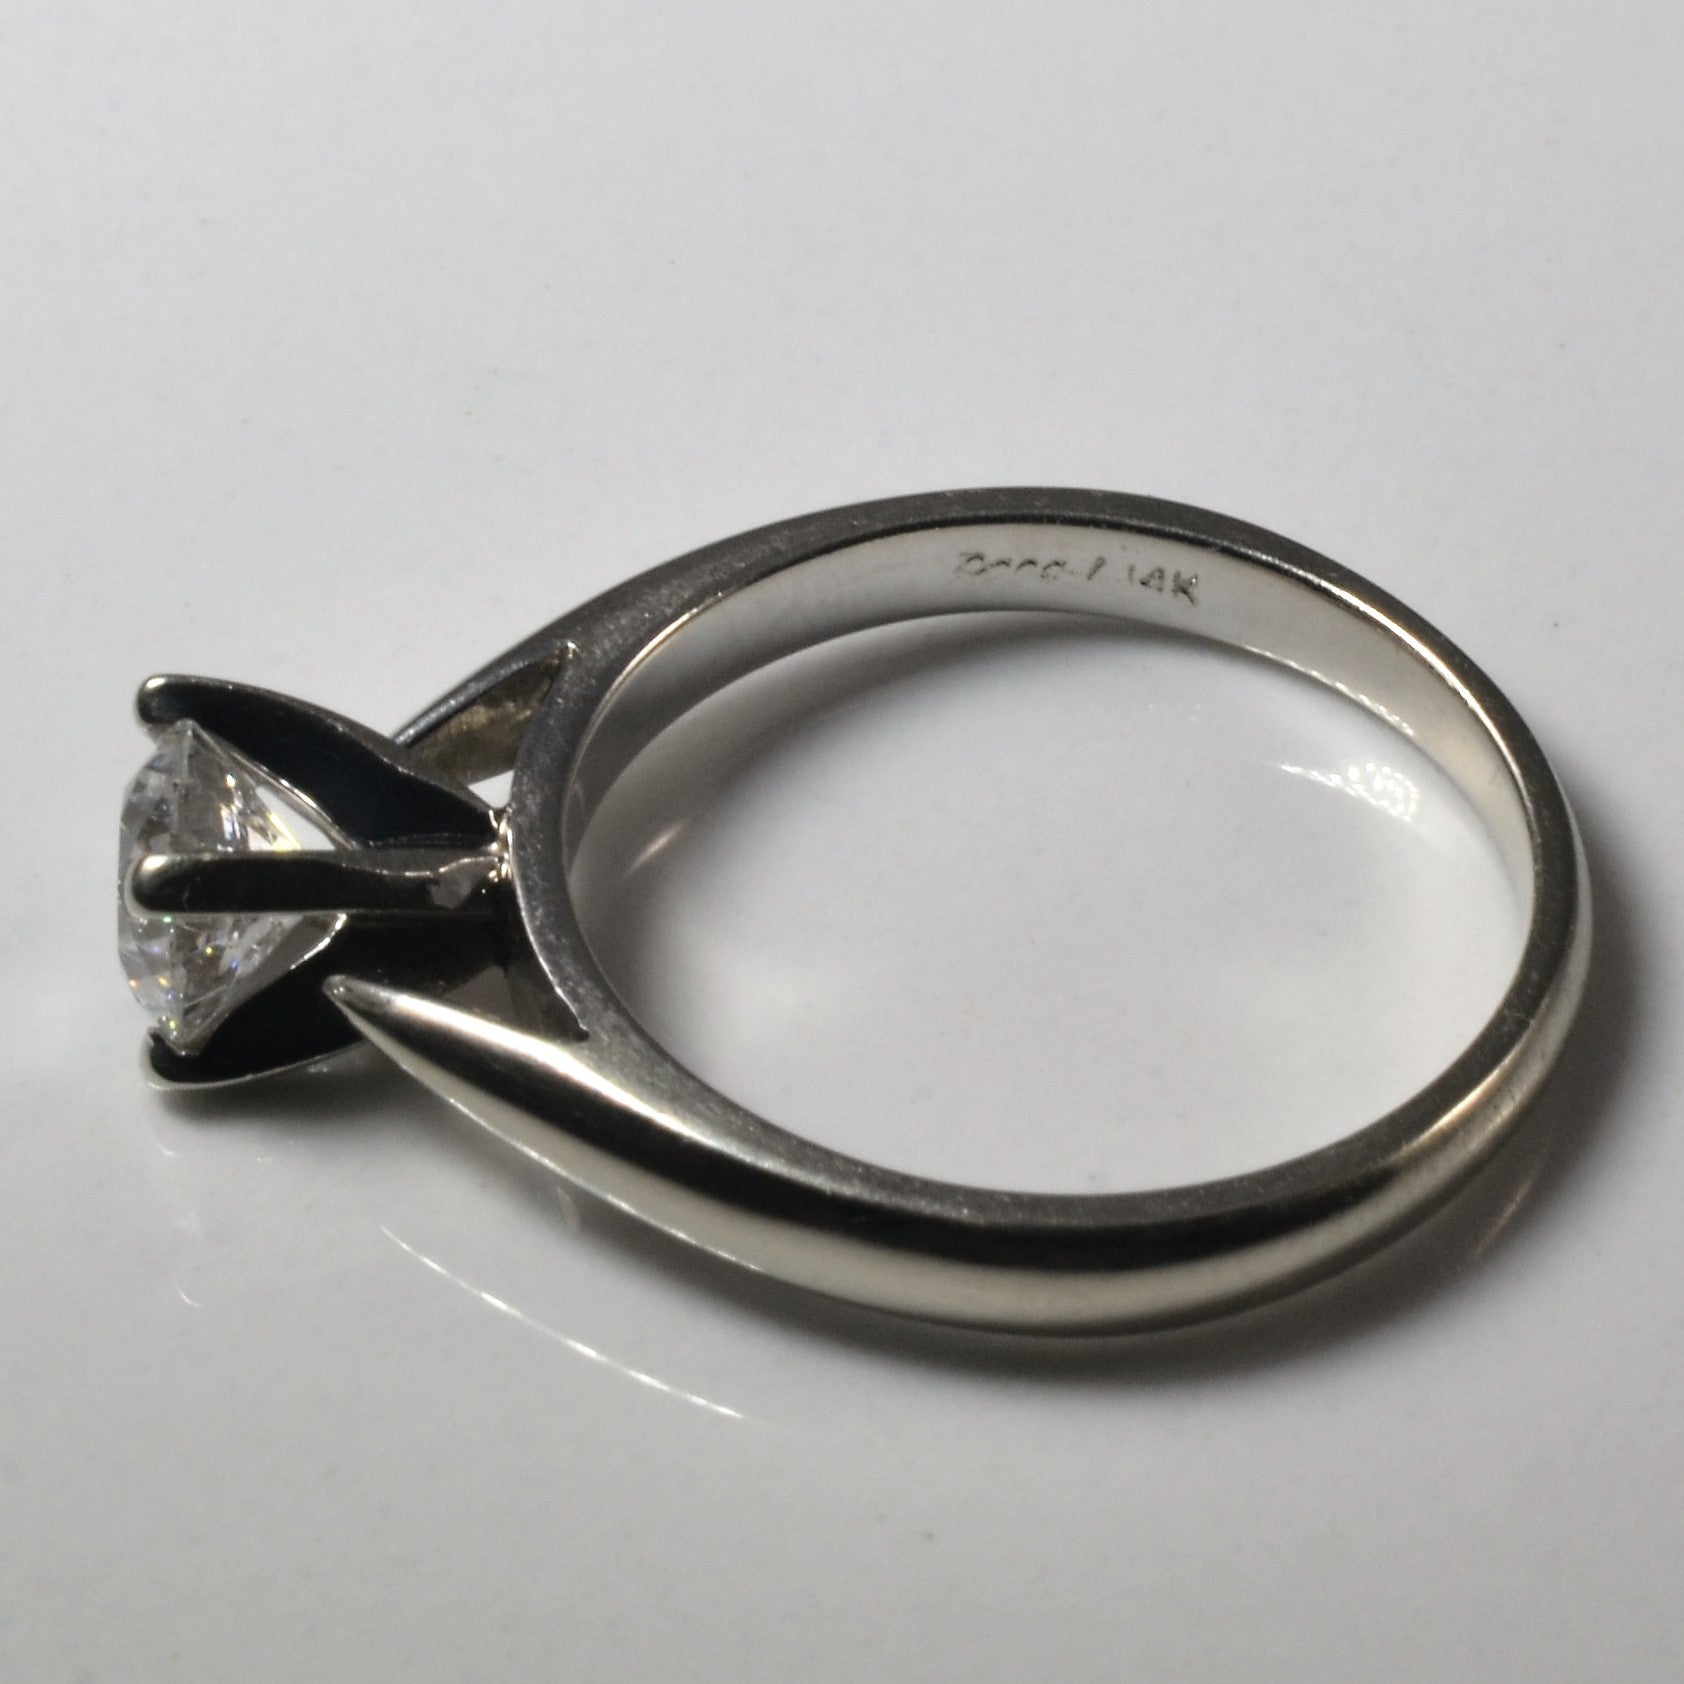 Solitaire Diamond Engagement Ring | 0.71ct | SZ 6 |